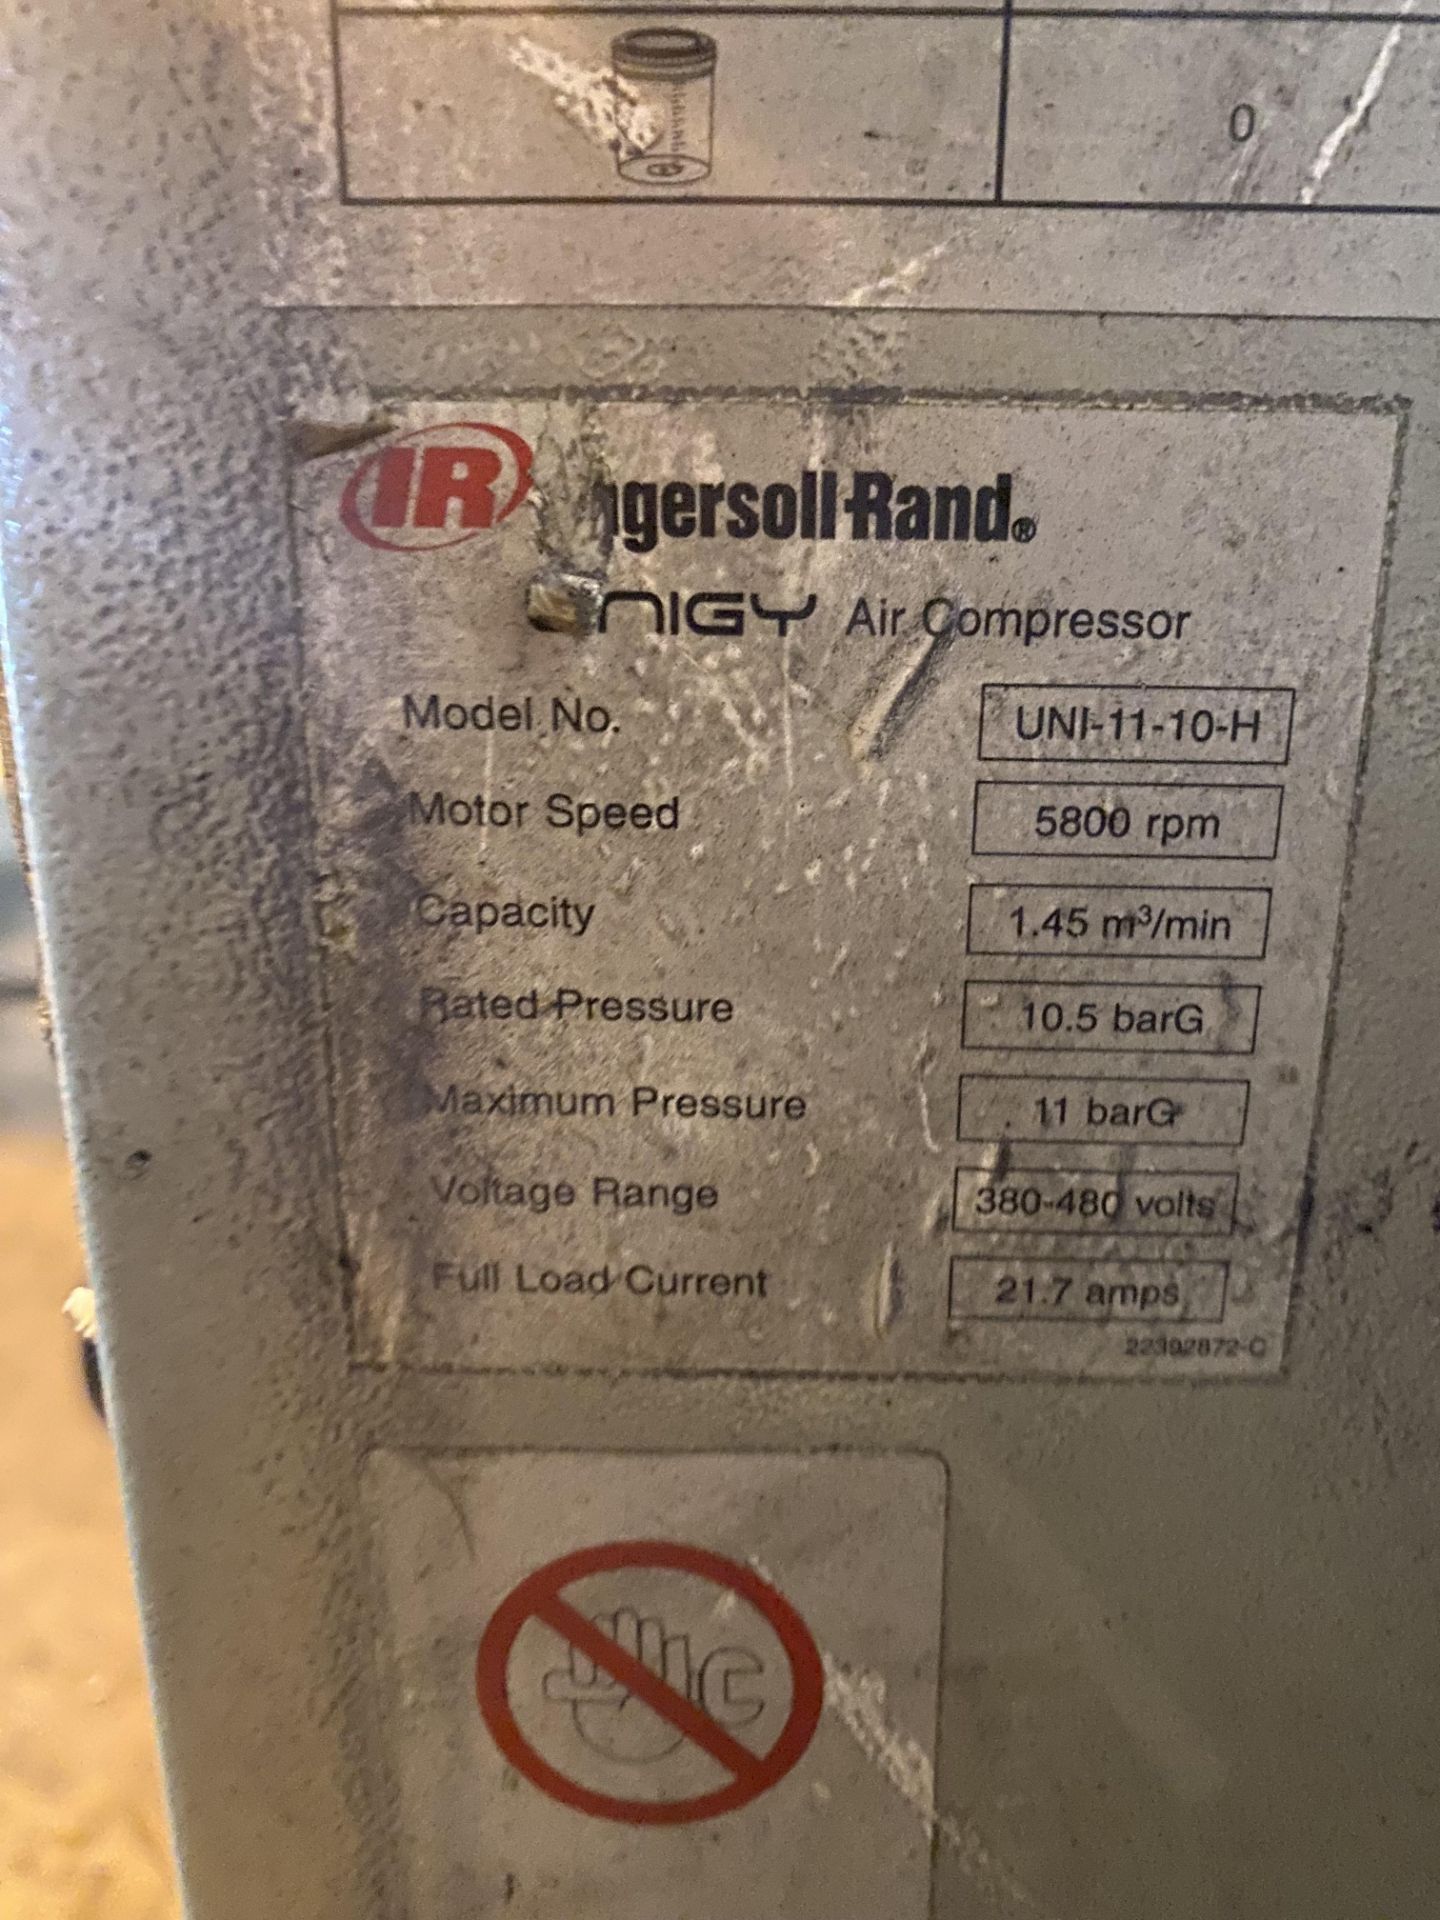 Ingersoll Rand receiver mounted air compressor, model UN1-11-10-H with Hiross Polestar refrigeration - Bild 4 aus 9